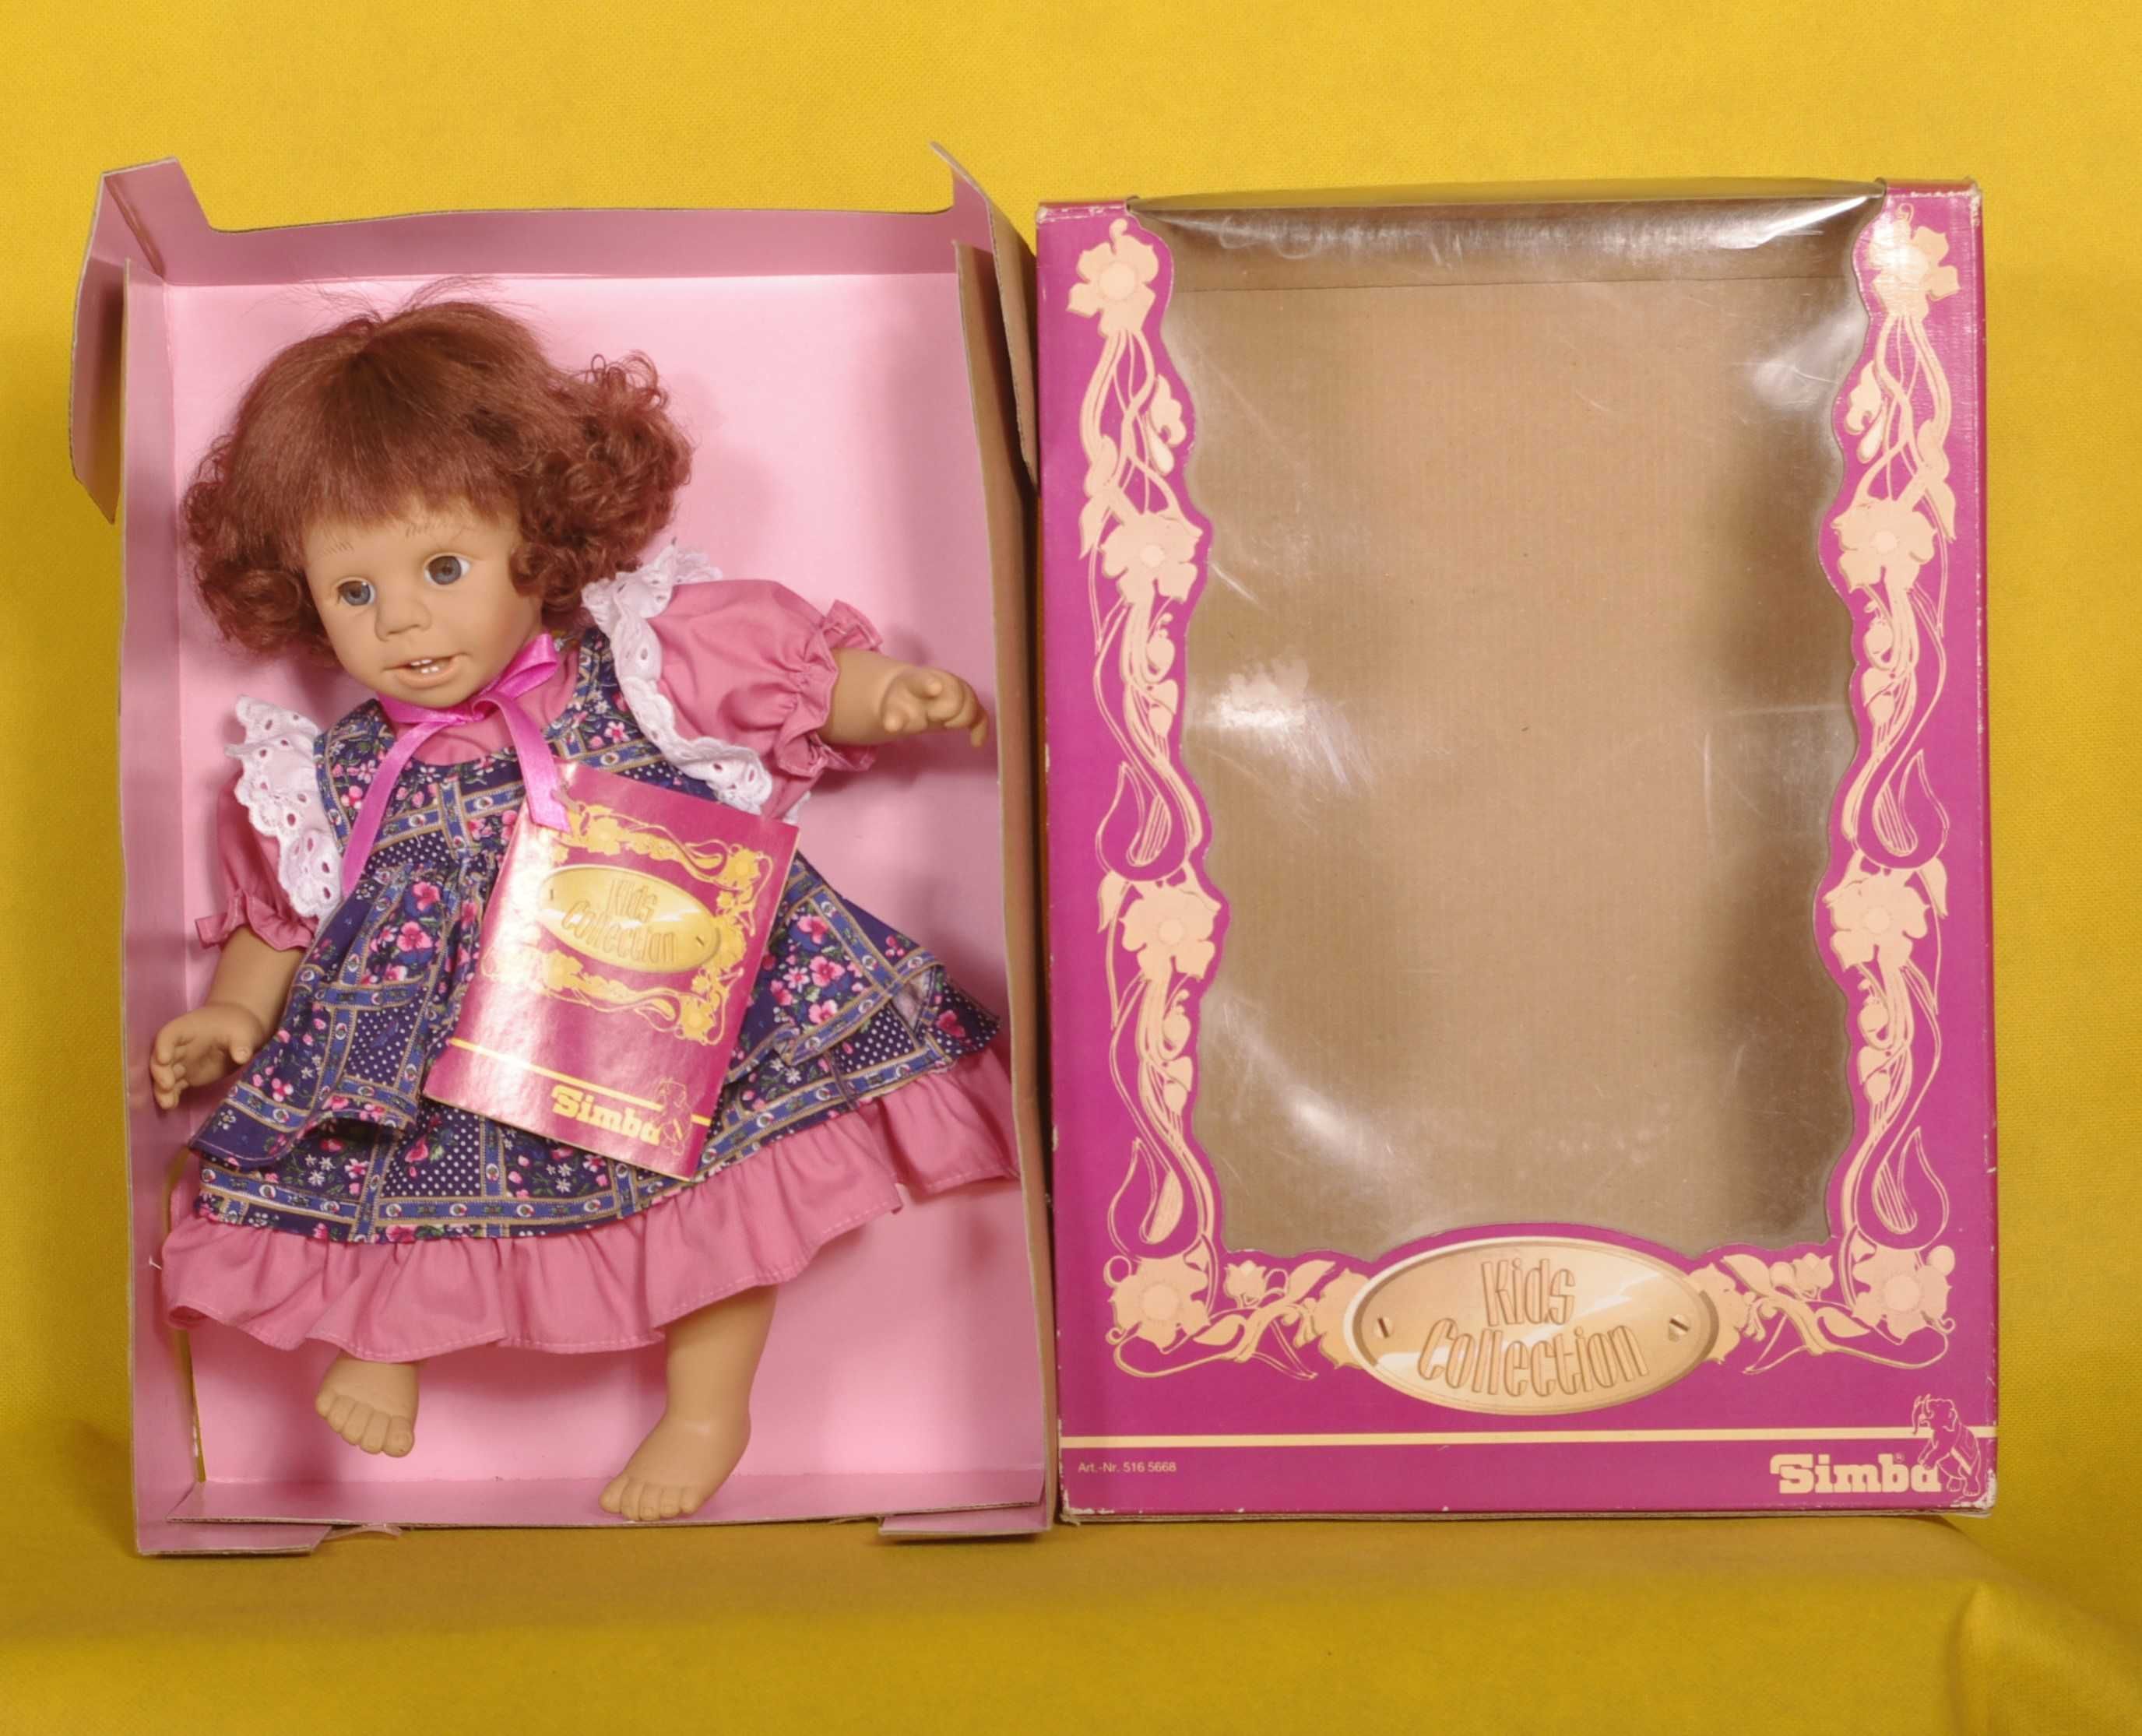 SIMBA KIDS COLLECTION DOLL lalka kolekcjonerska 36 cm Bobas Unikat